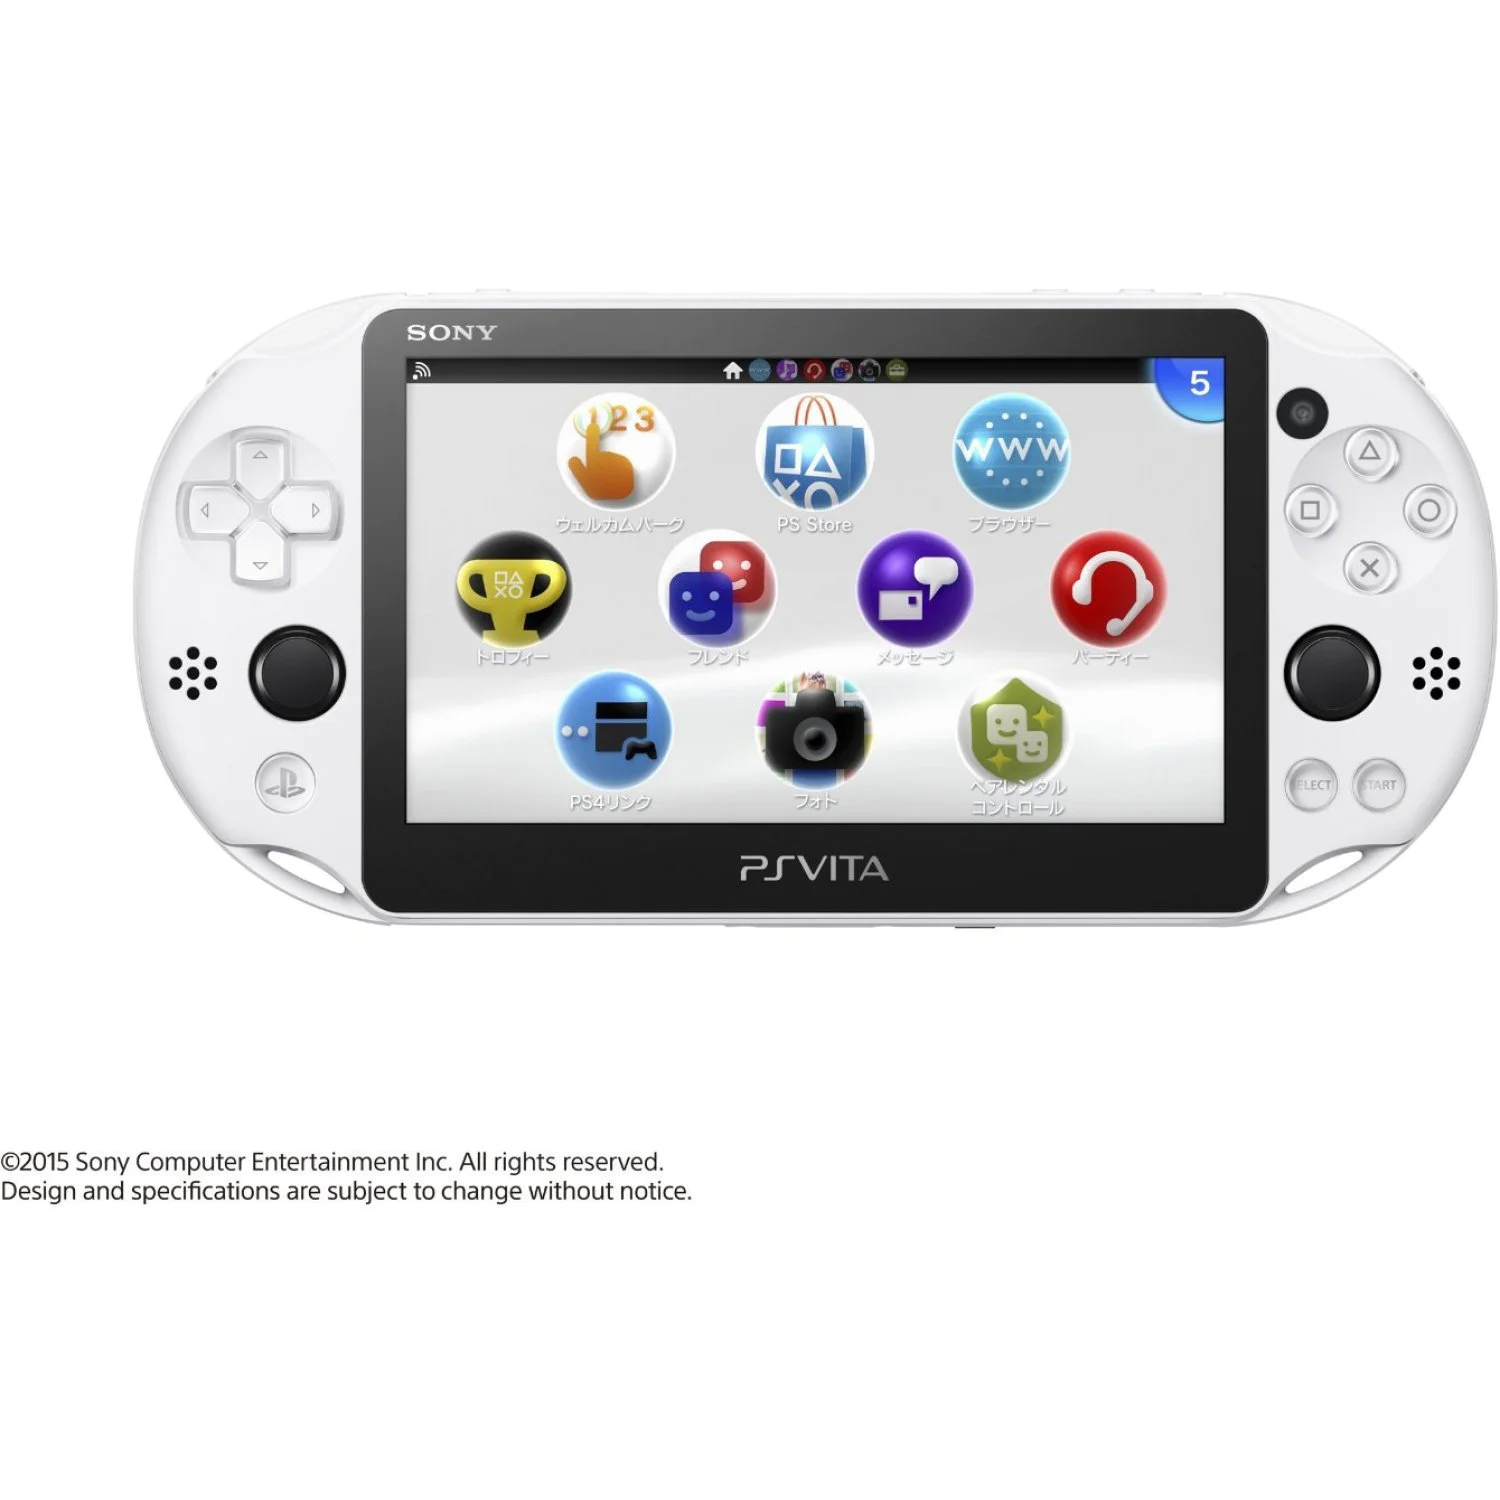 Sony Playstation Vita PS - New Slim Model - PCH-2006 (Glacier White)